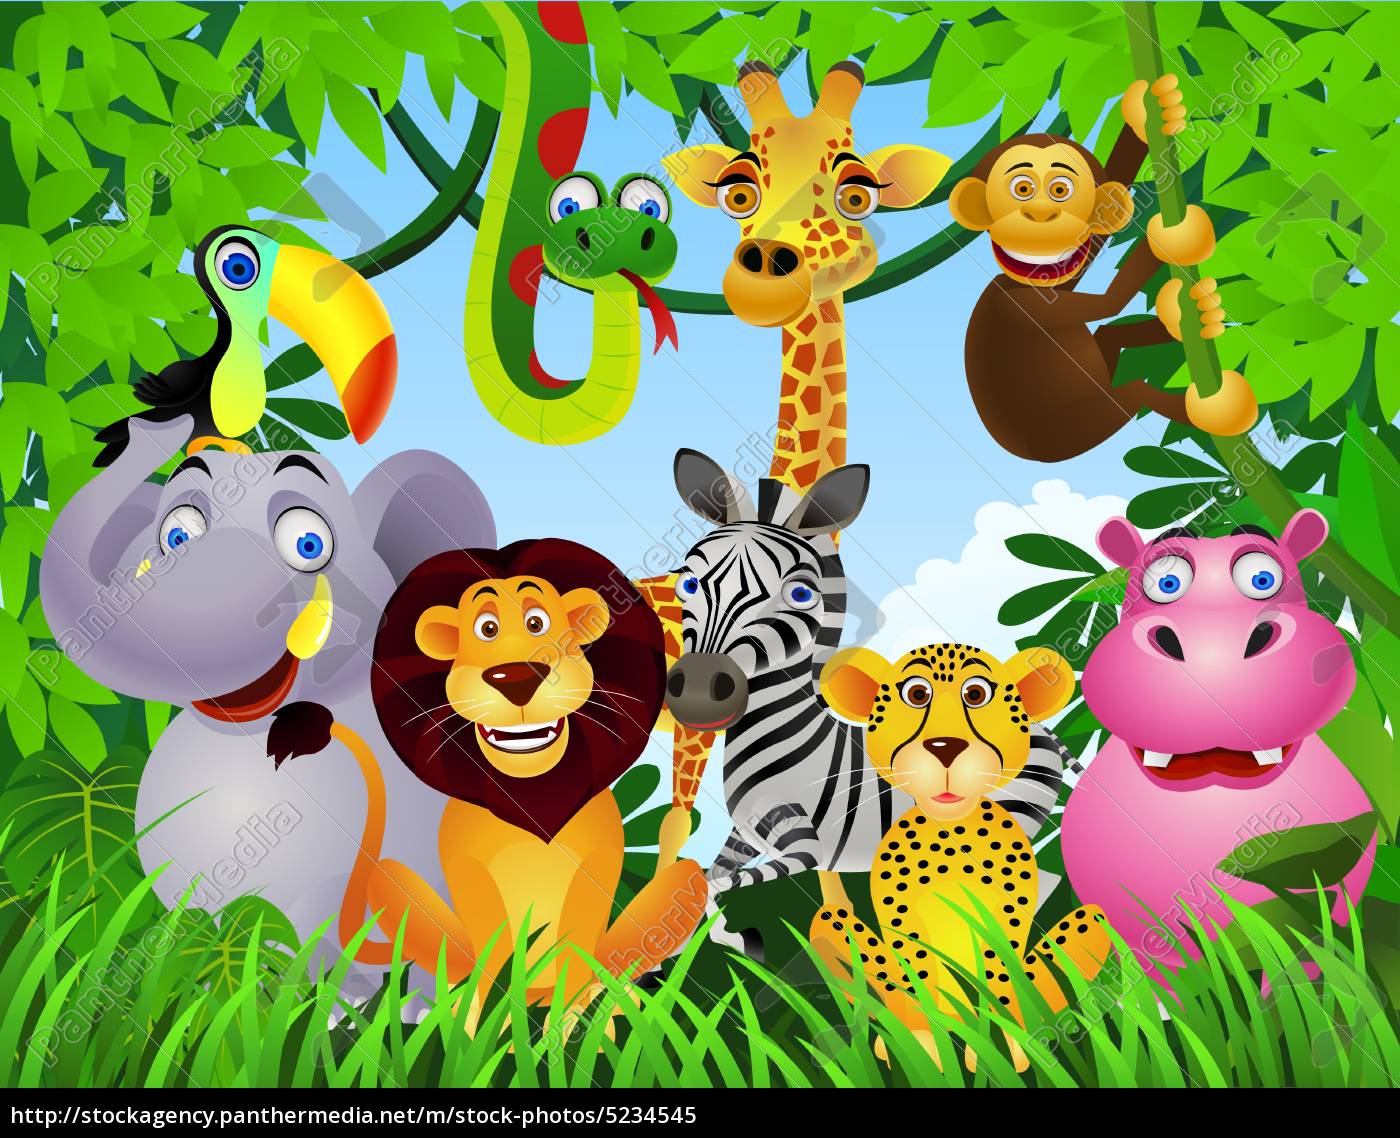 Dibujos De Animales La Selva Royalty-Free Images, Stock Photos